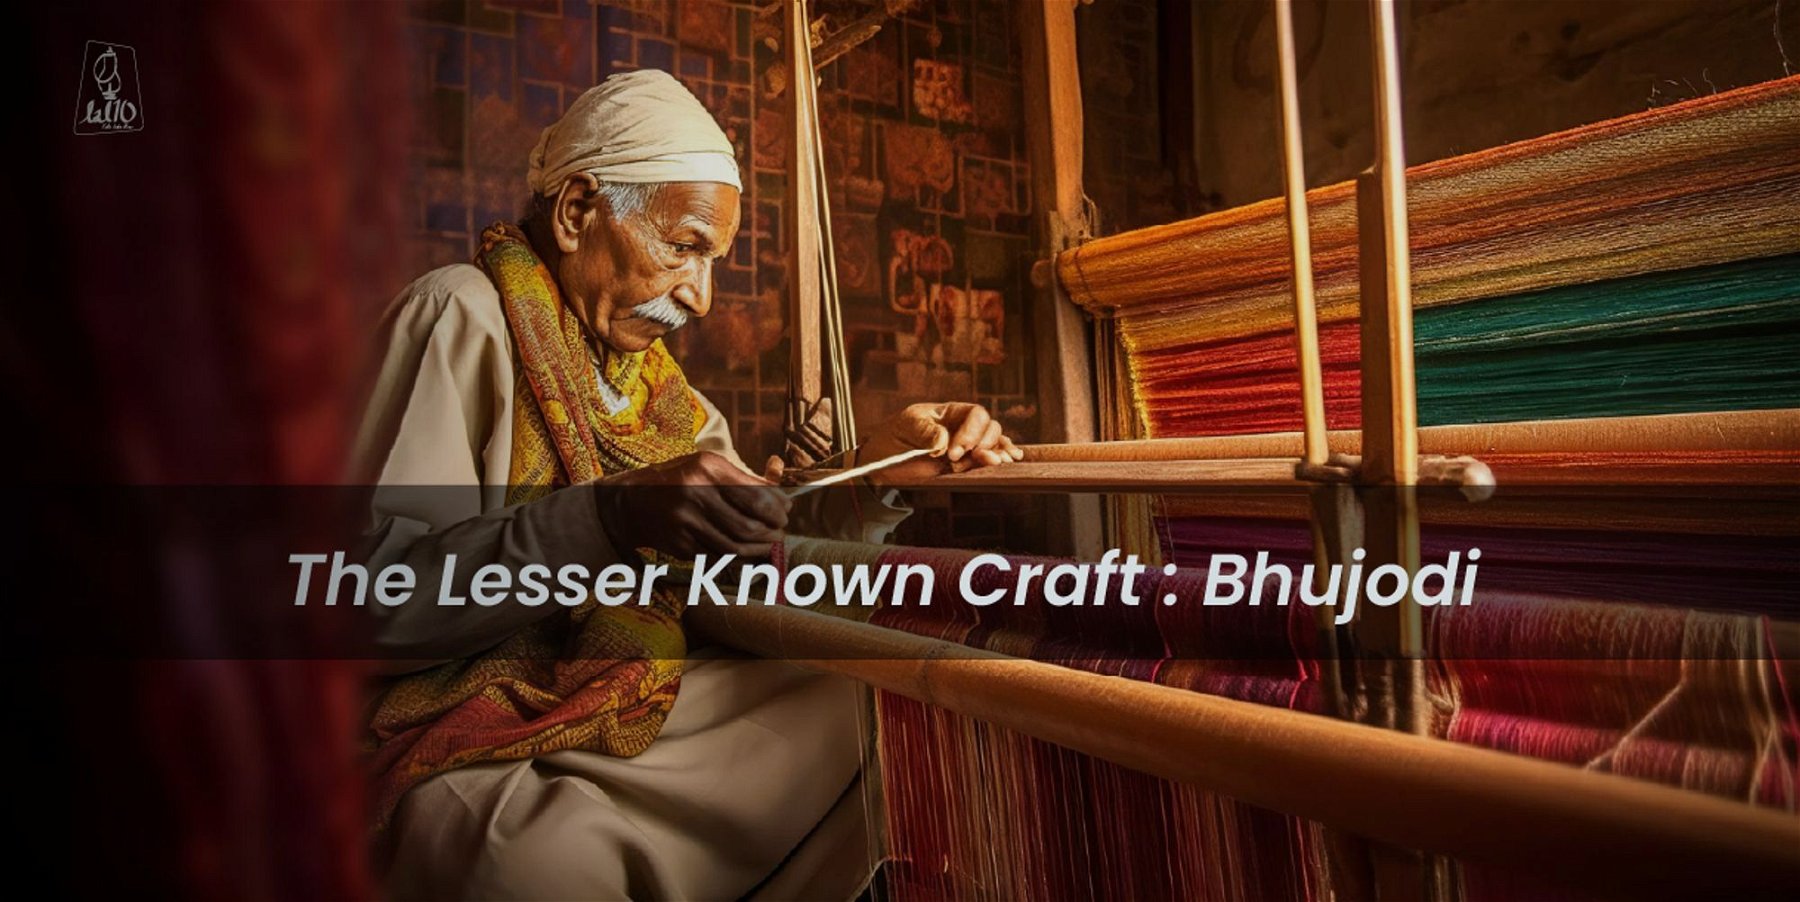 The lesser known craft: Bhujodi